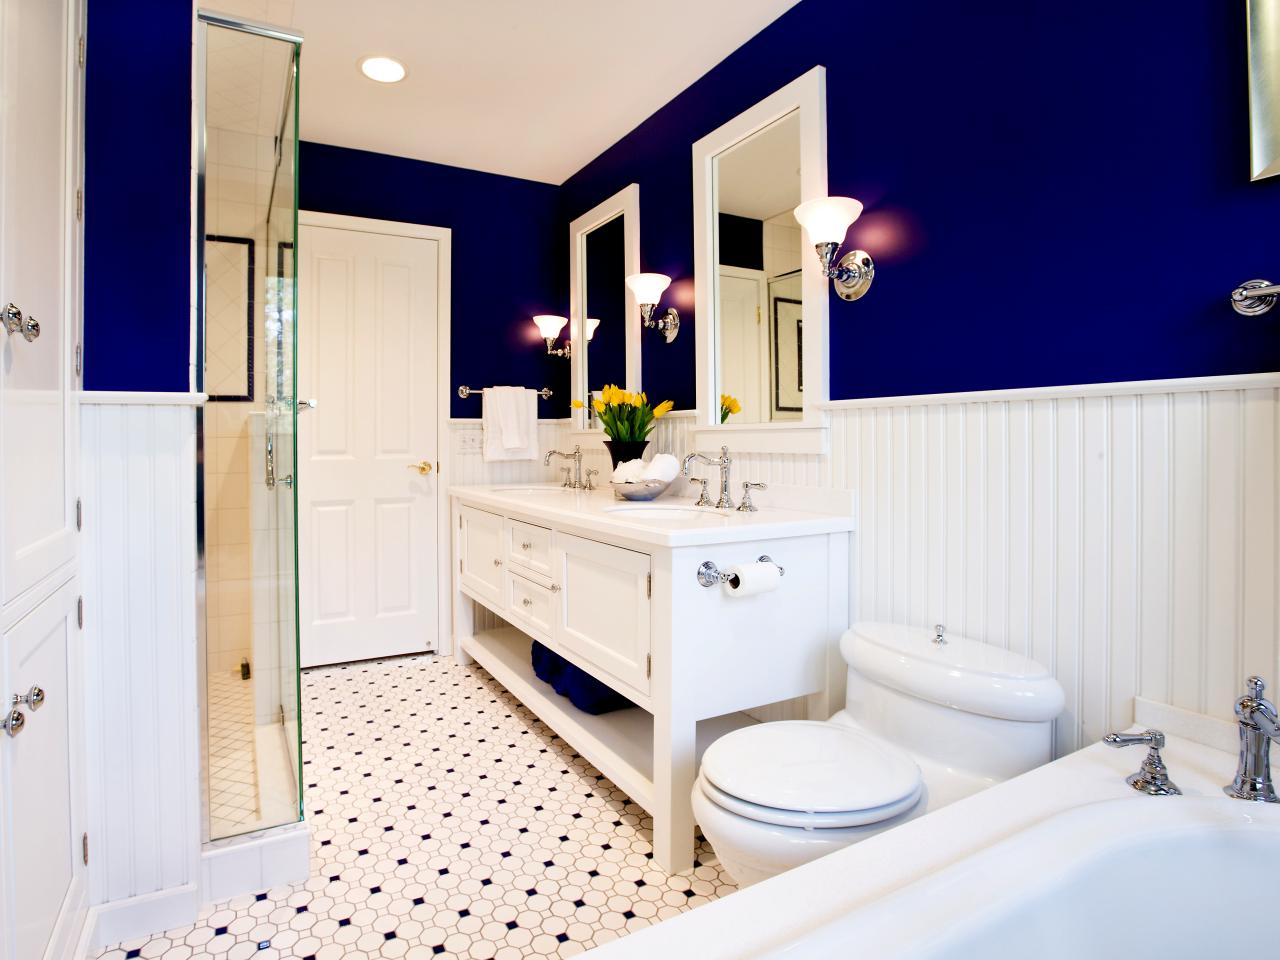 Cobalt blue in the bathroom - a classy interior